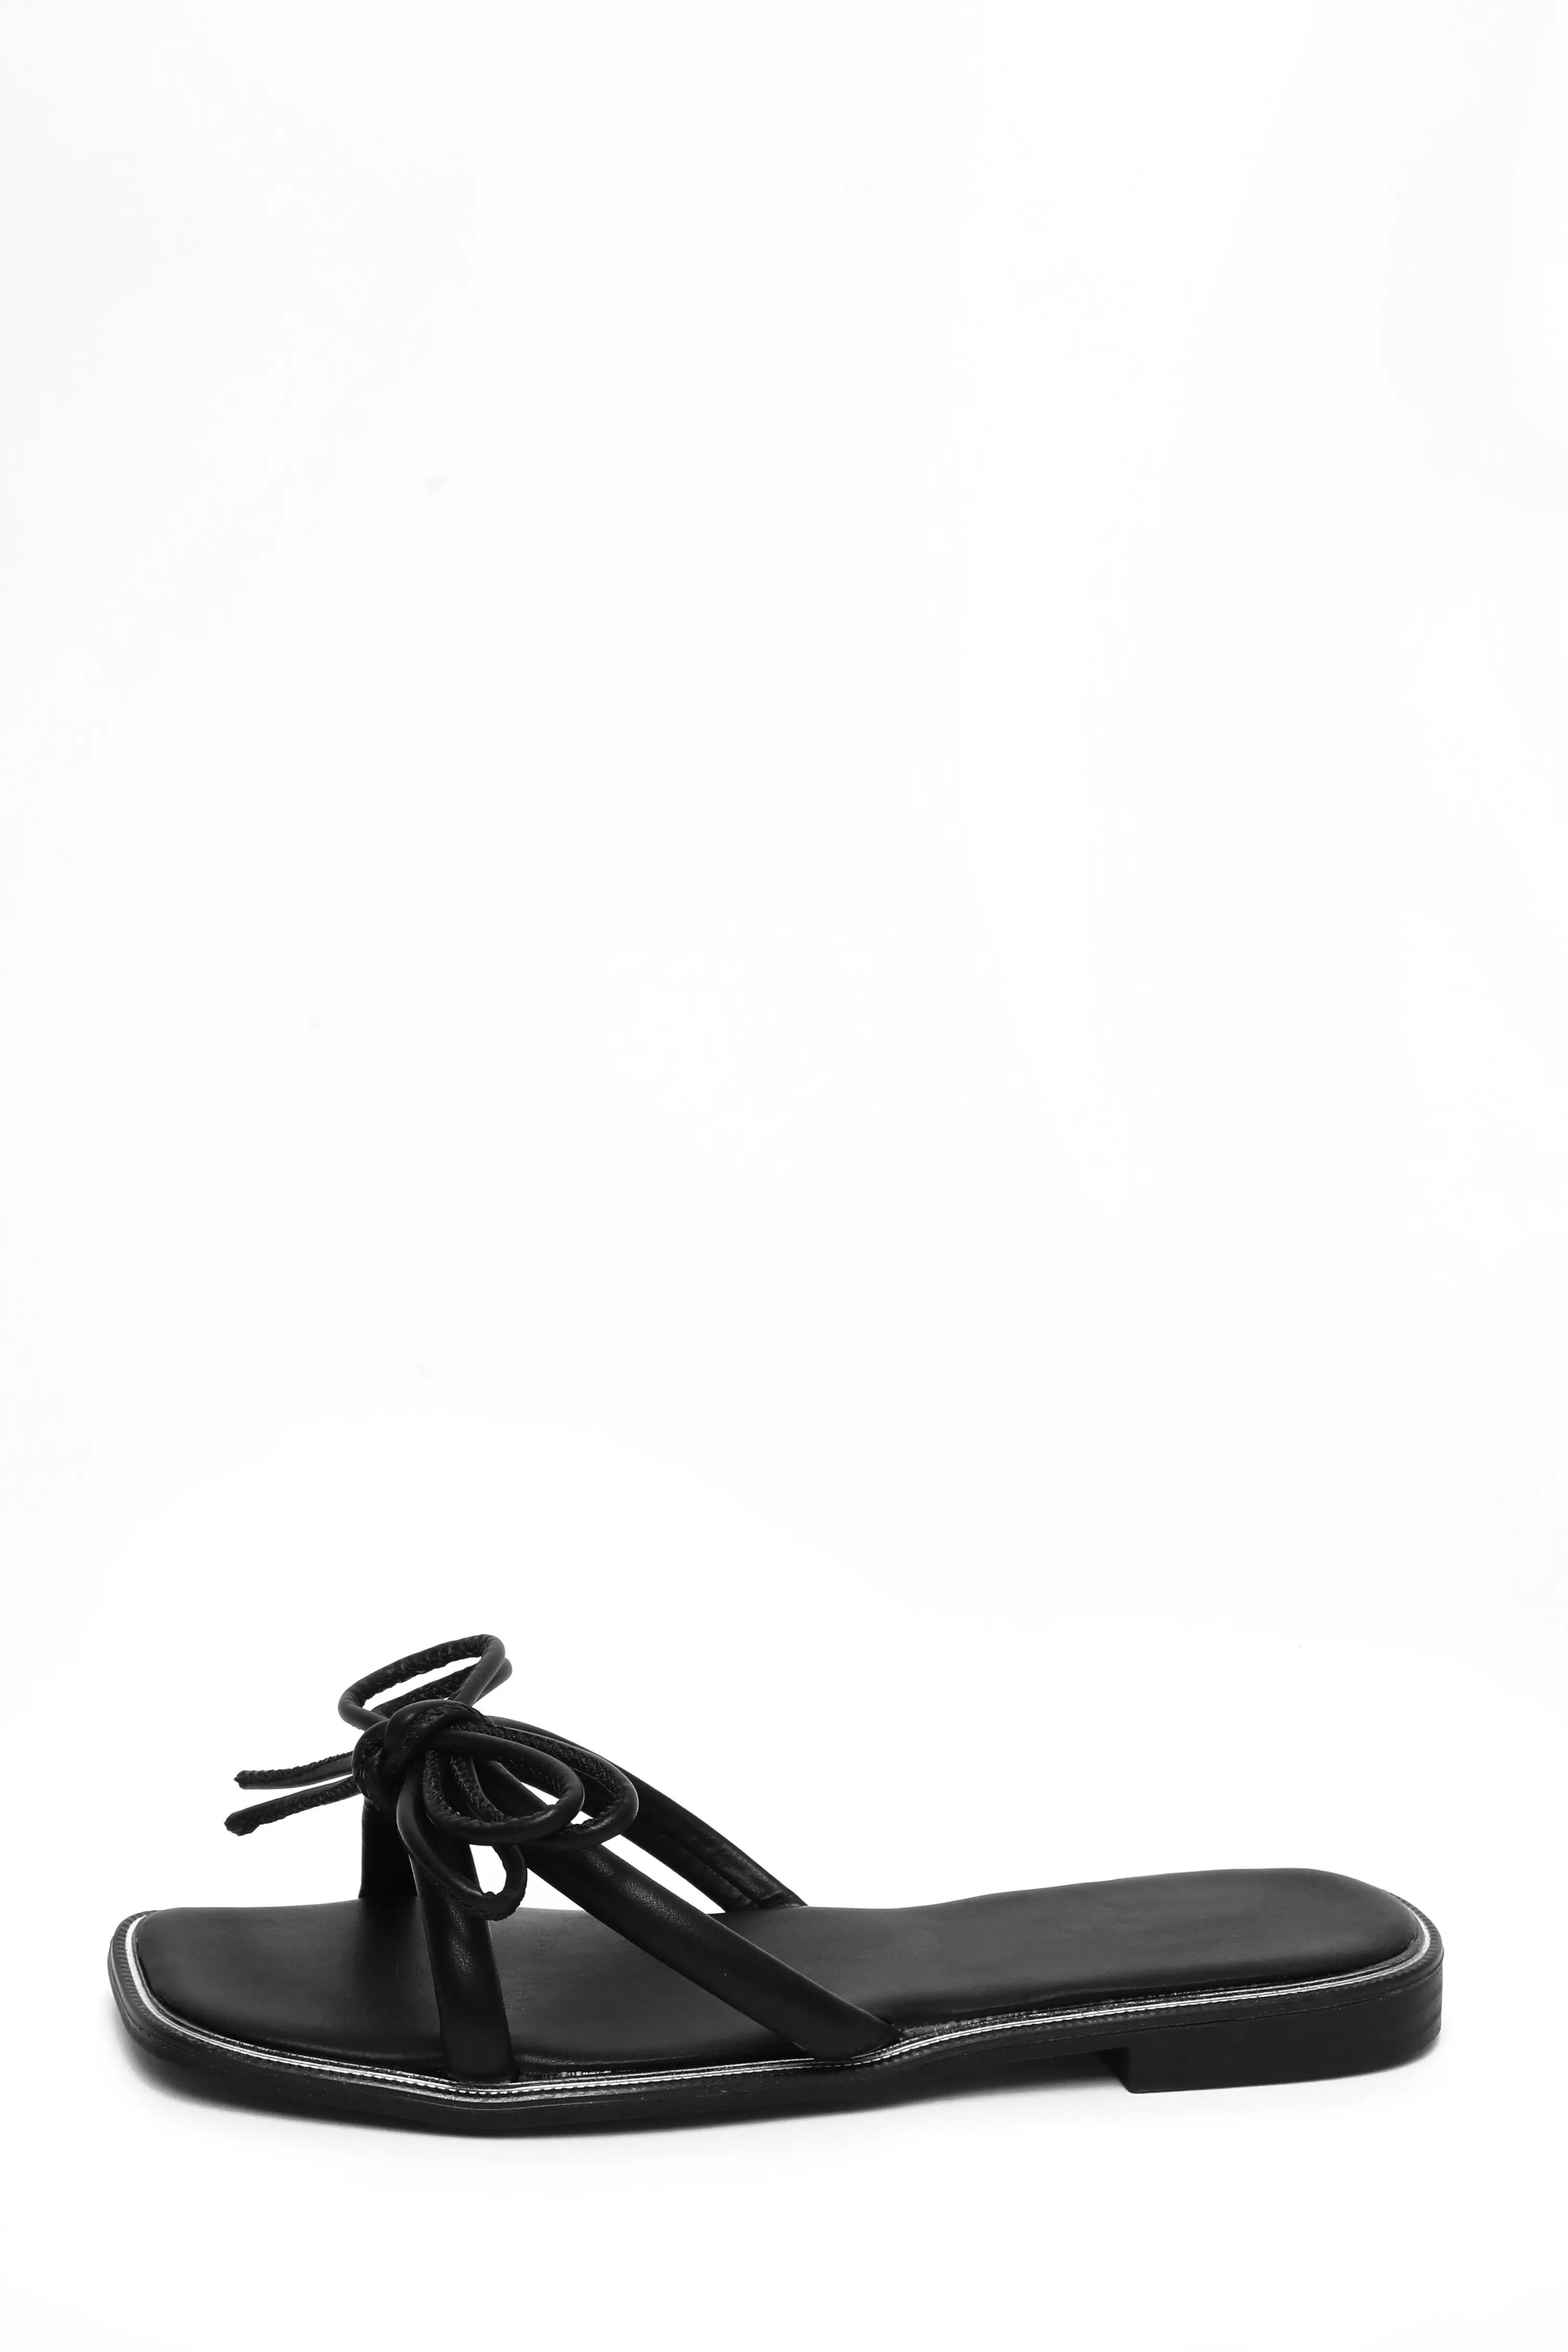 Black Faux Leather Bow Flat Sandals